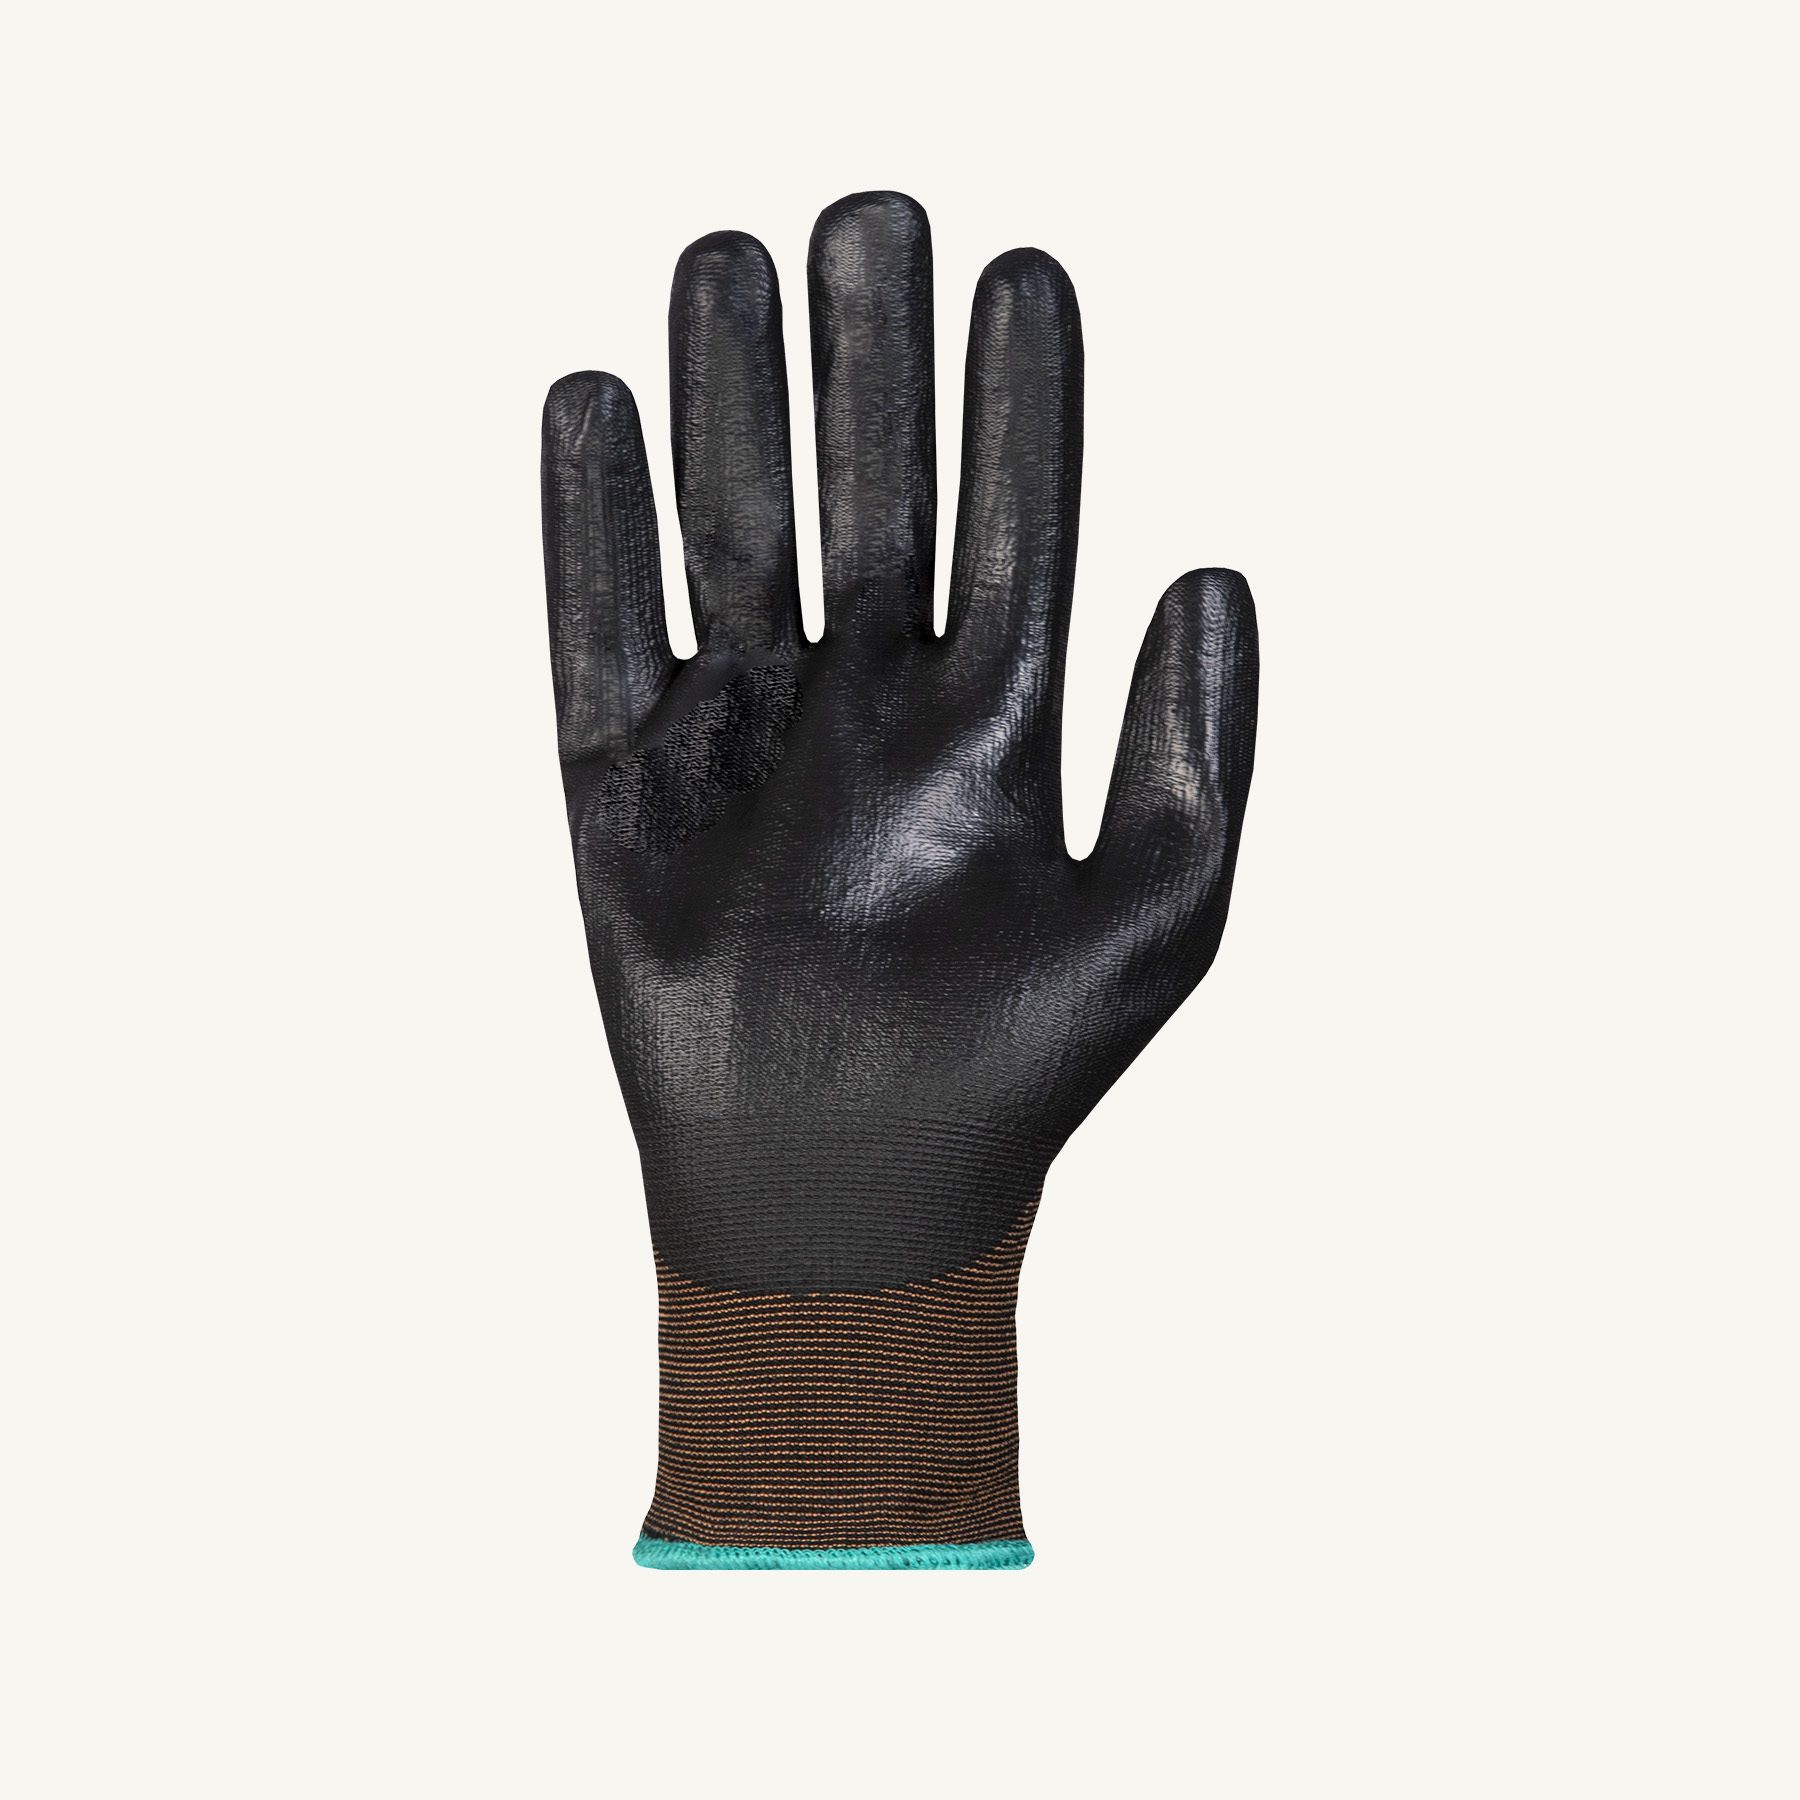 S21SXGPU glove palm